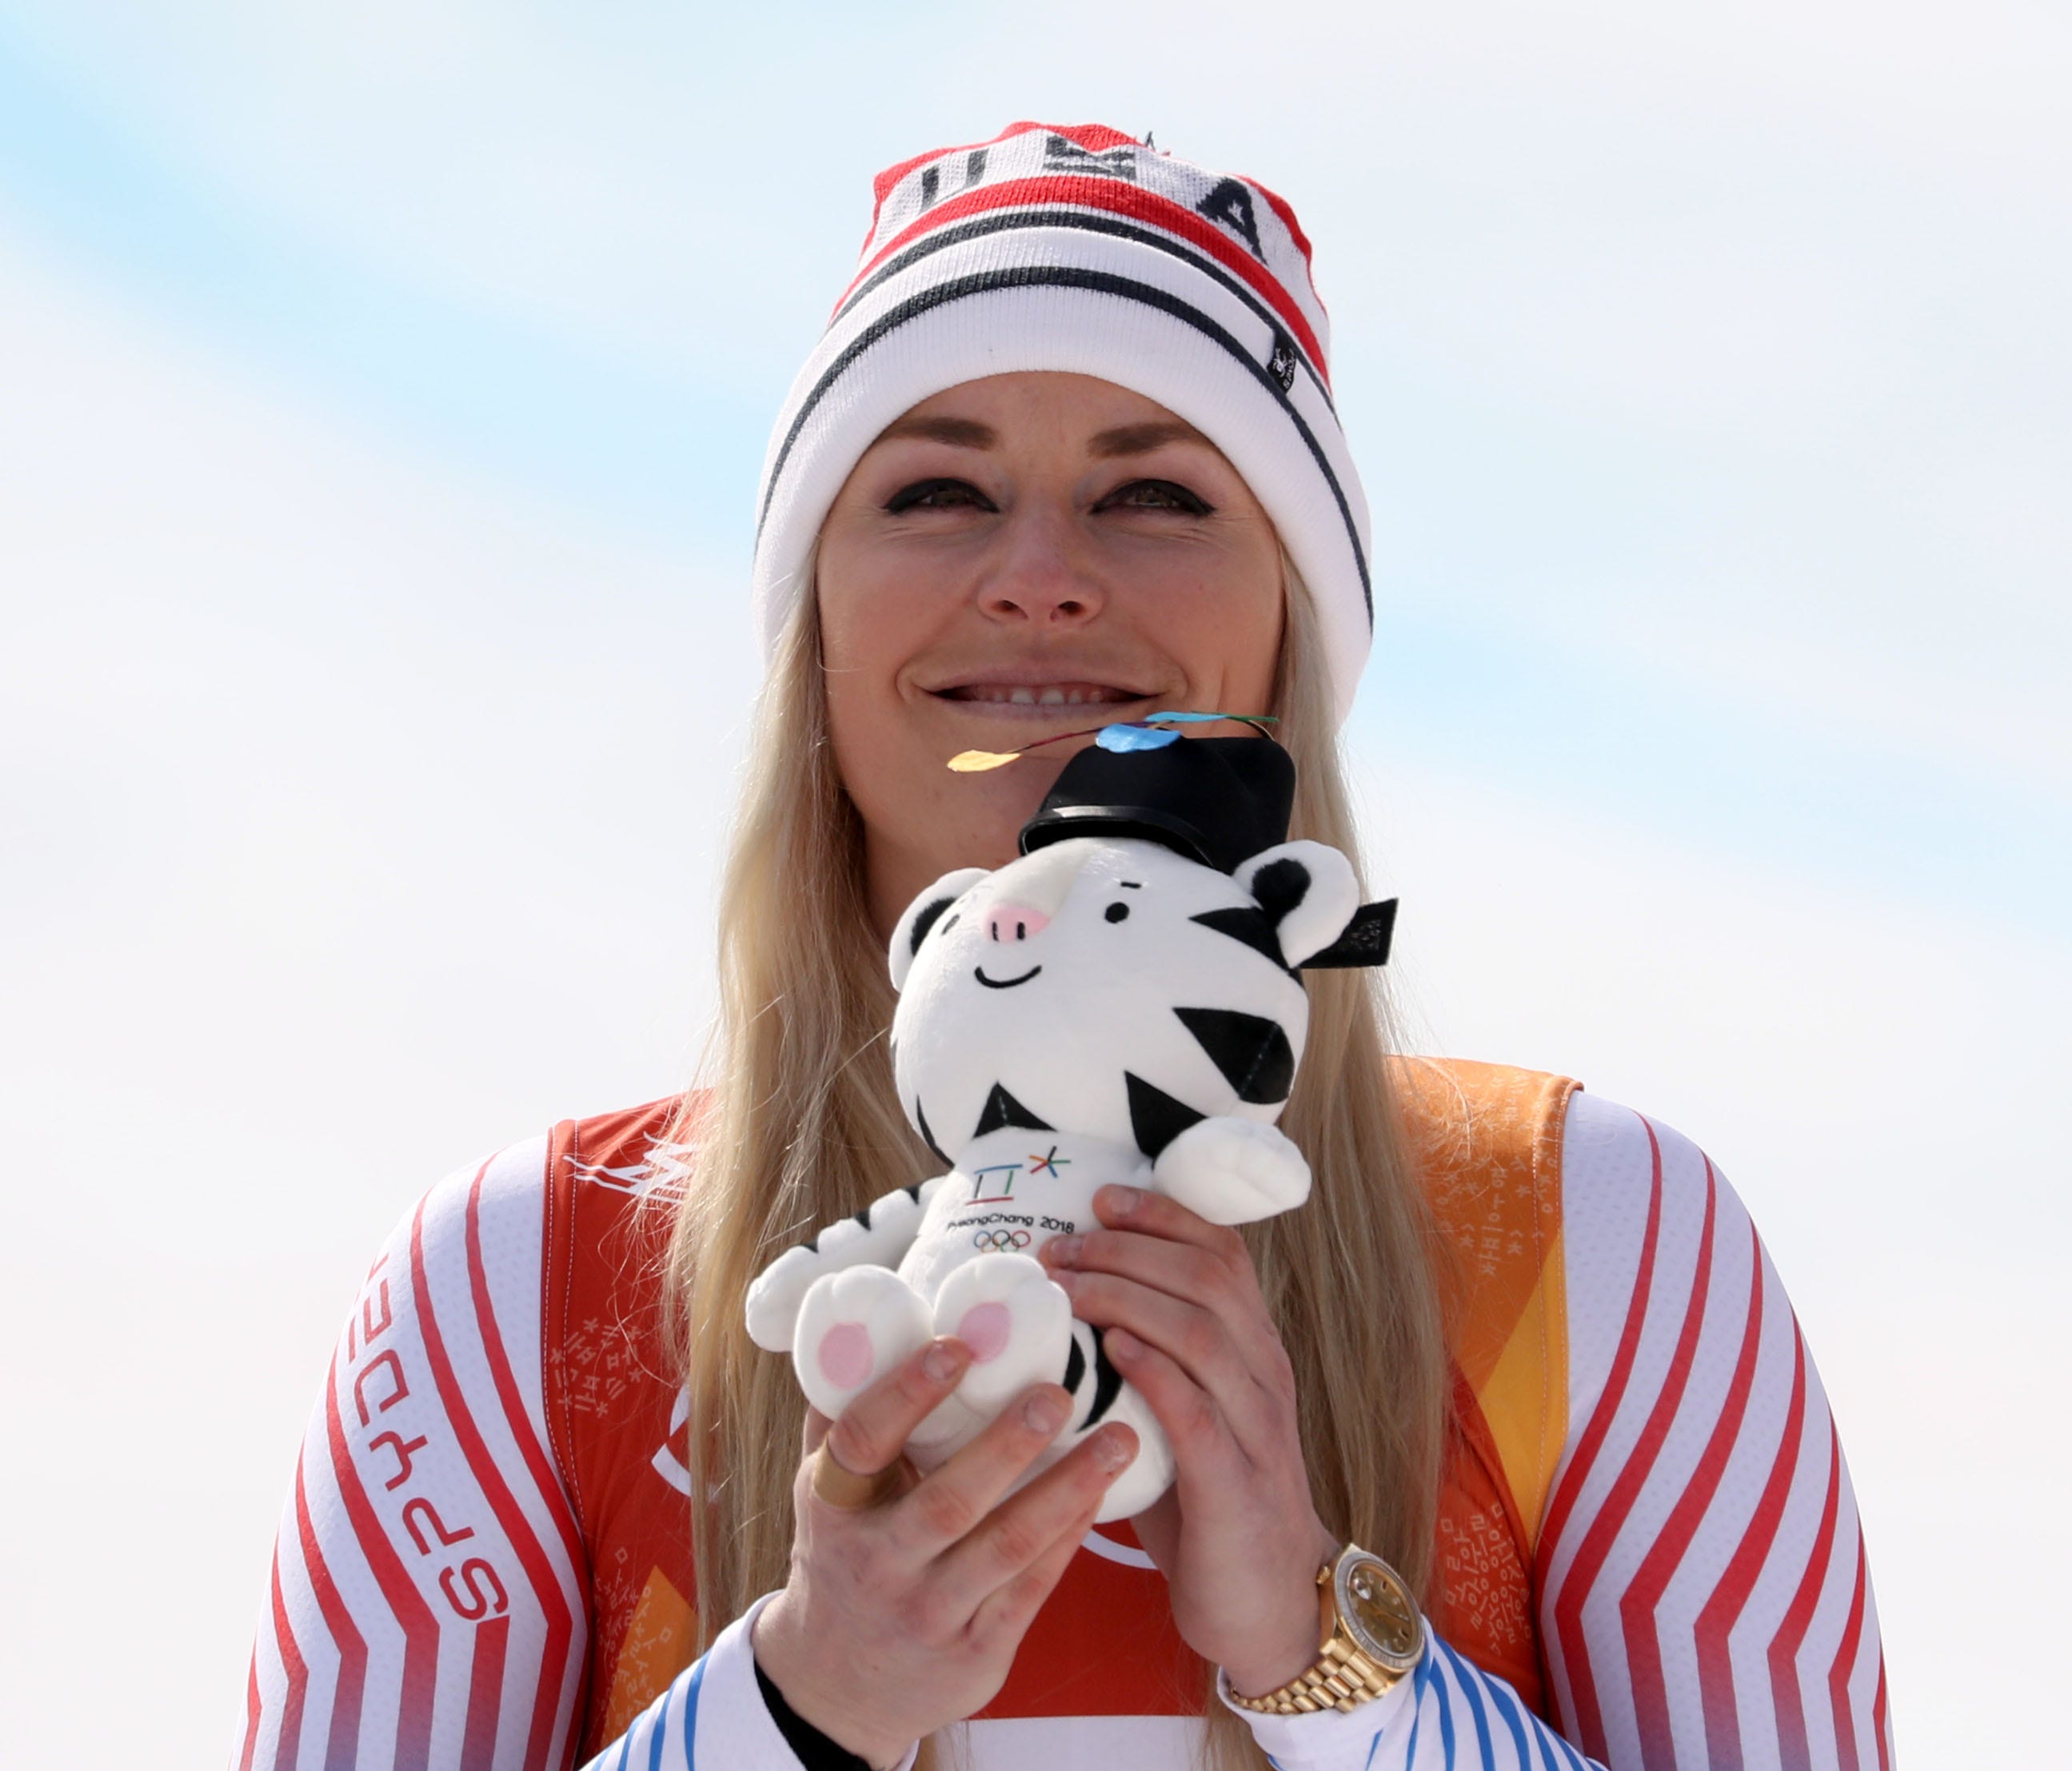 Lindsey Vonn (USA) celebrates winning the bronze medal in the women's downhill.